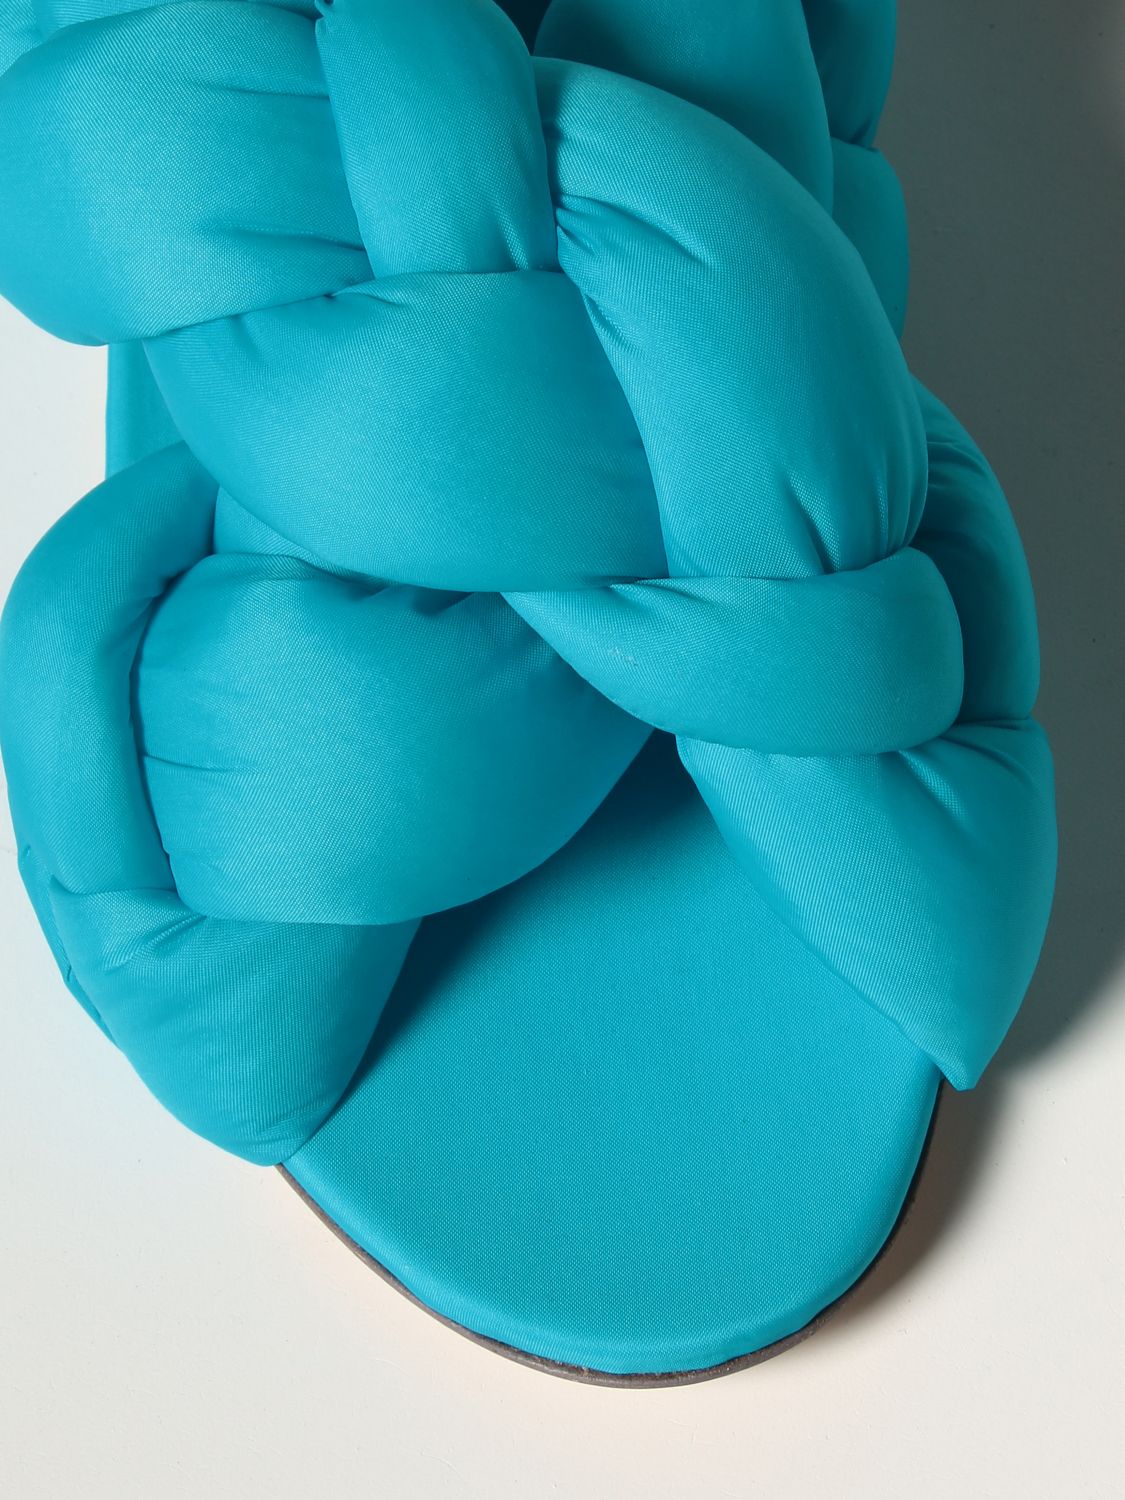 Sandales Cuir Sebastian Milano en coloris Bleu Femme Chaussures Chaussures plates Sandales plates 